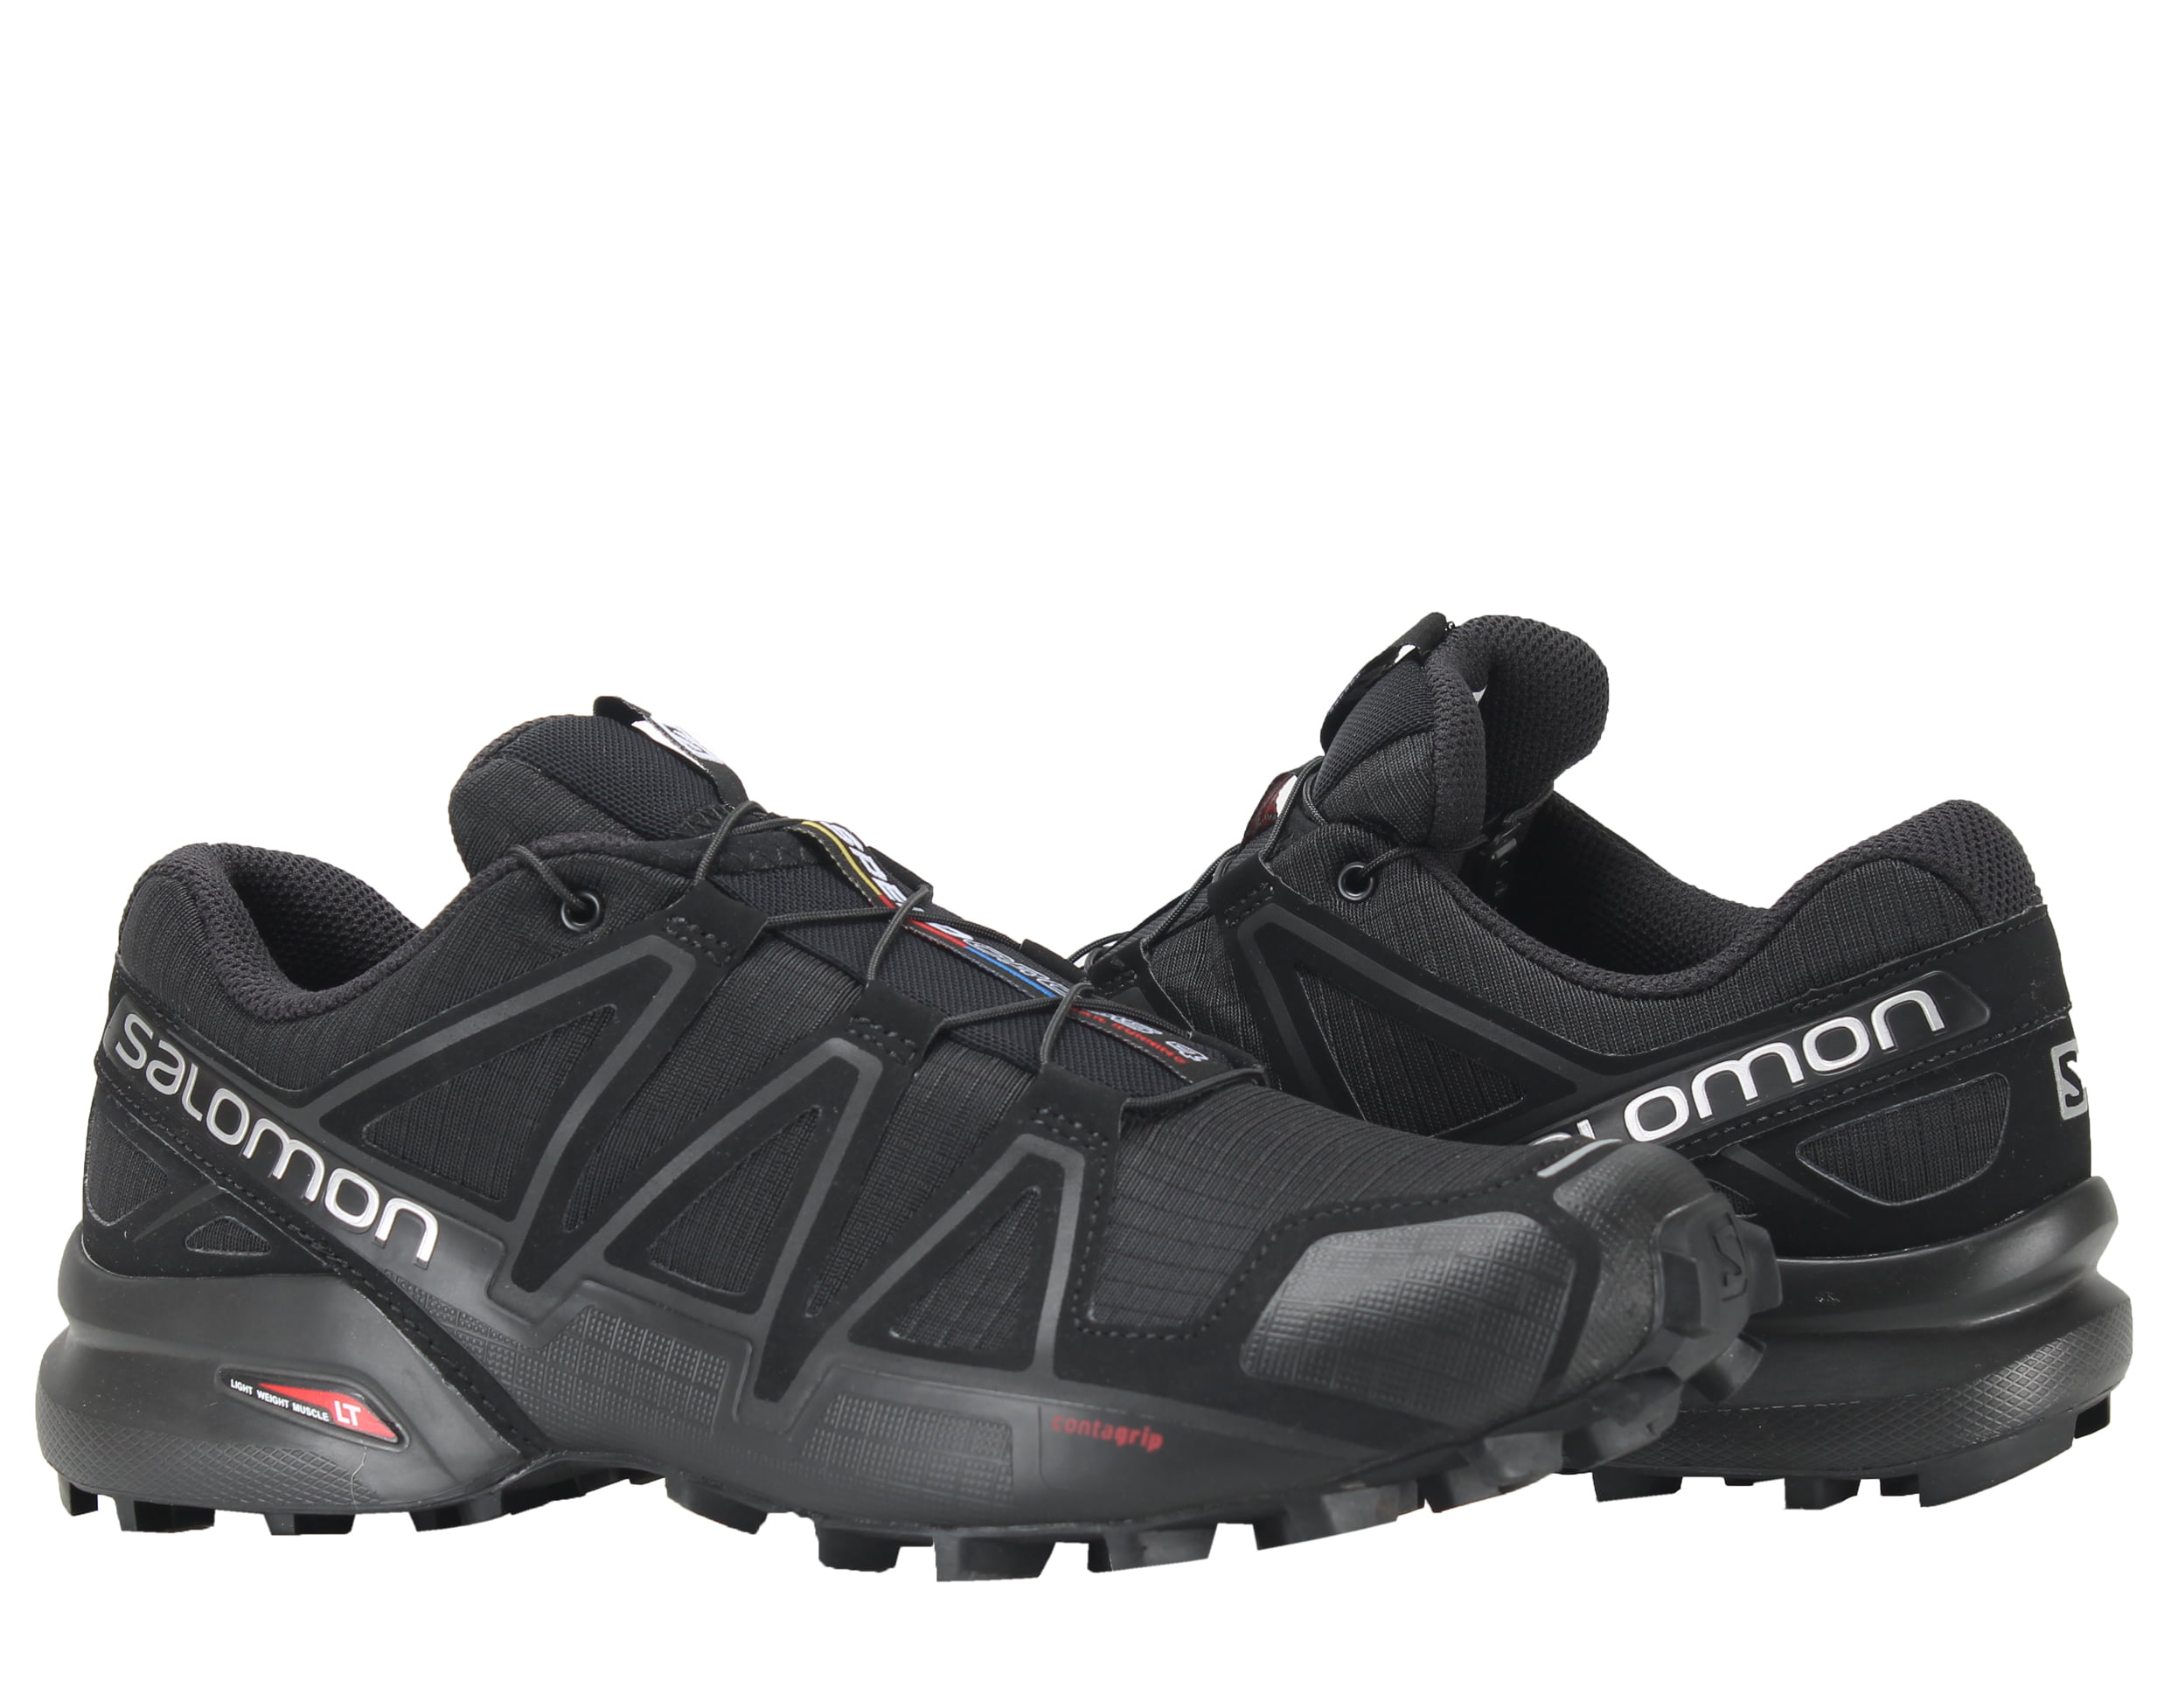 SALOMON Men's Speedcross 4 Trail Running Shoes - Eastern Mountain Sports